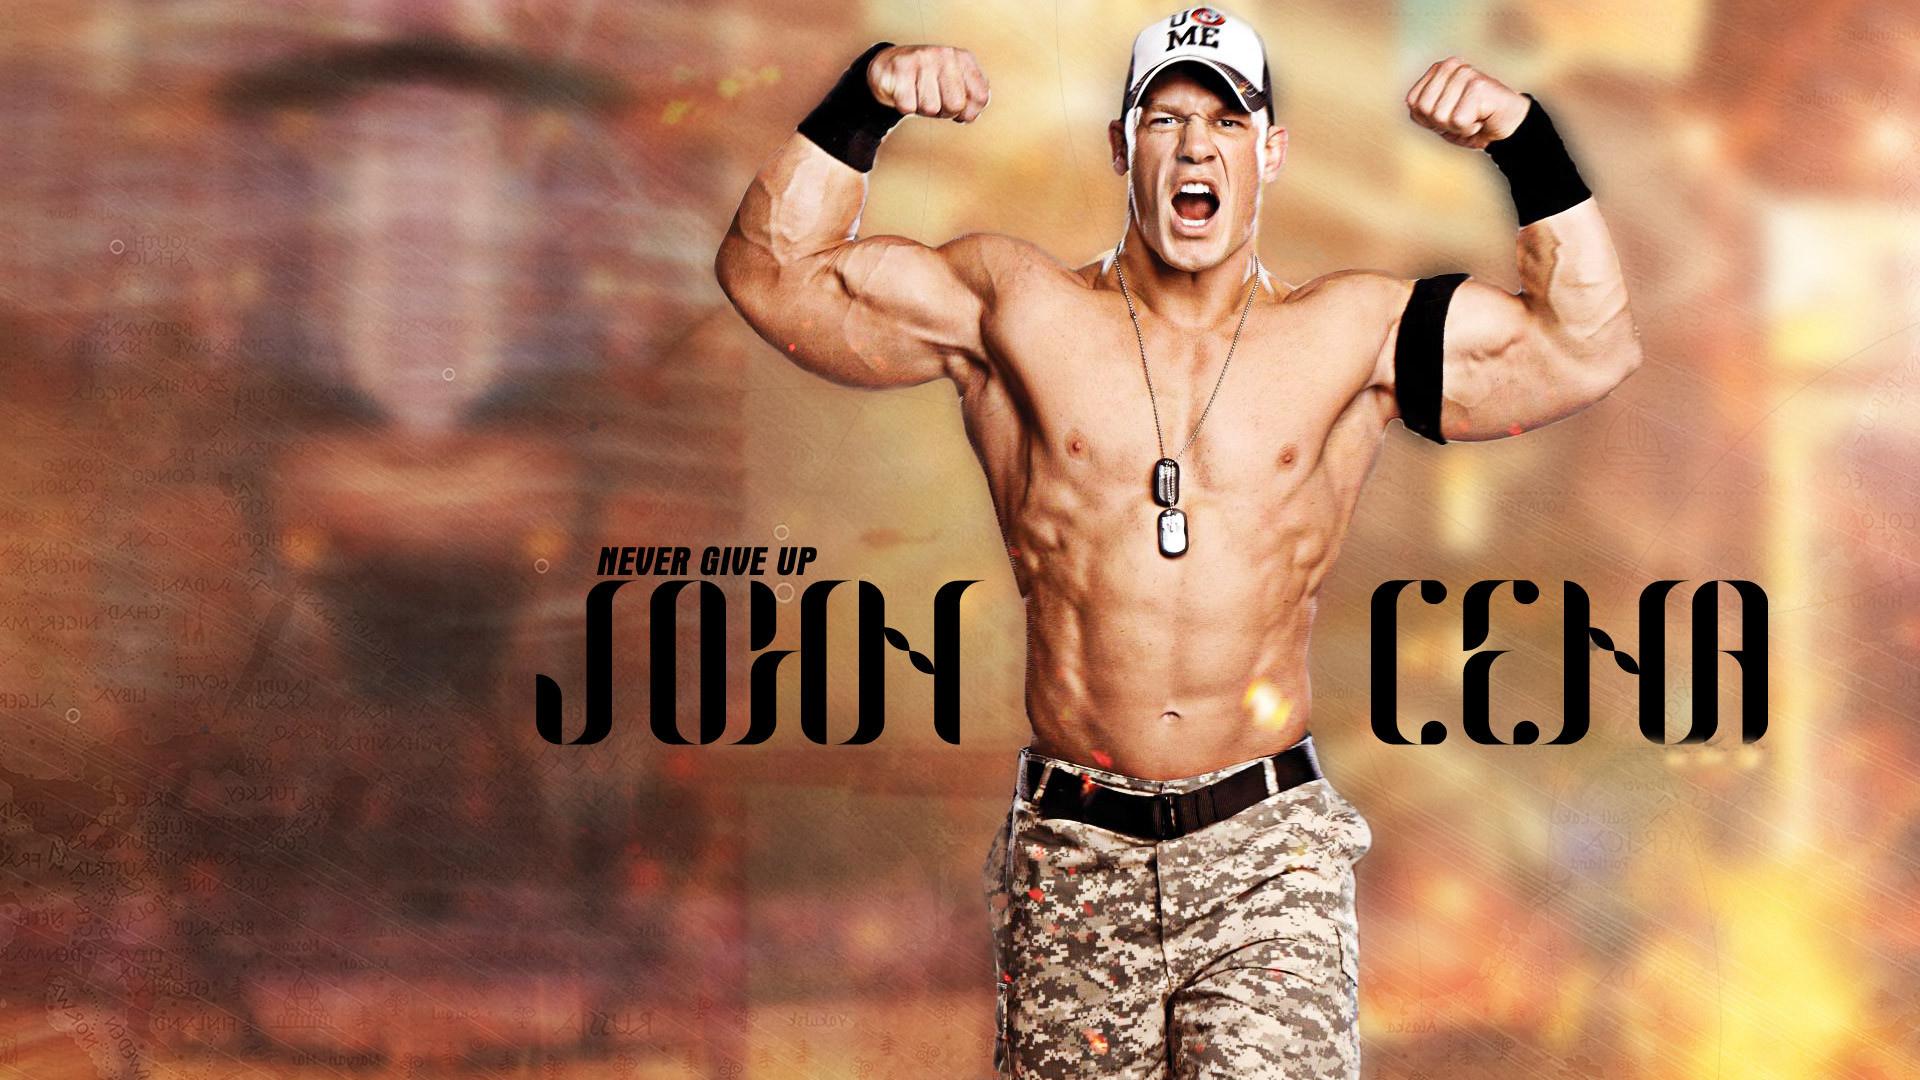 John Cena at 2048 x 2048 iPad size wallpapers HD quality